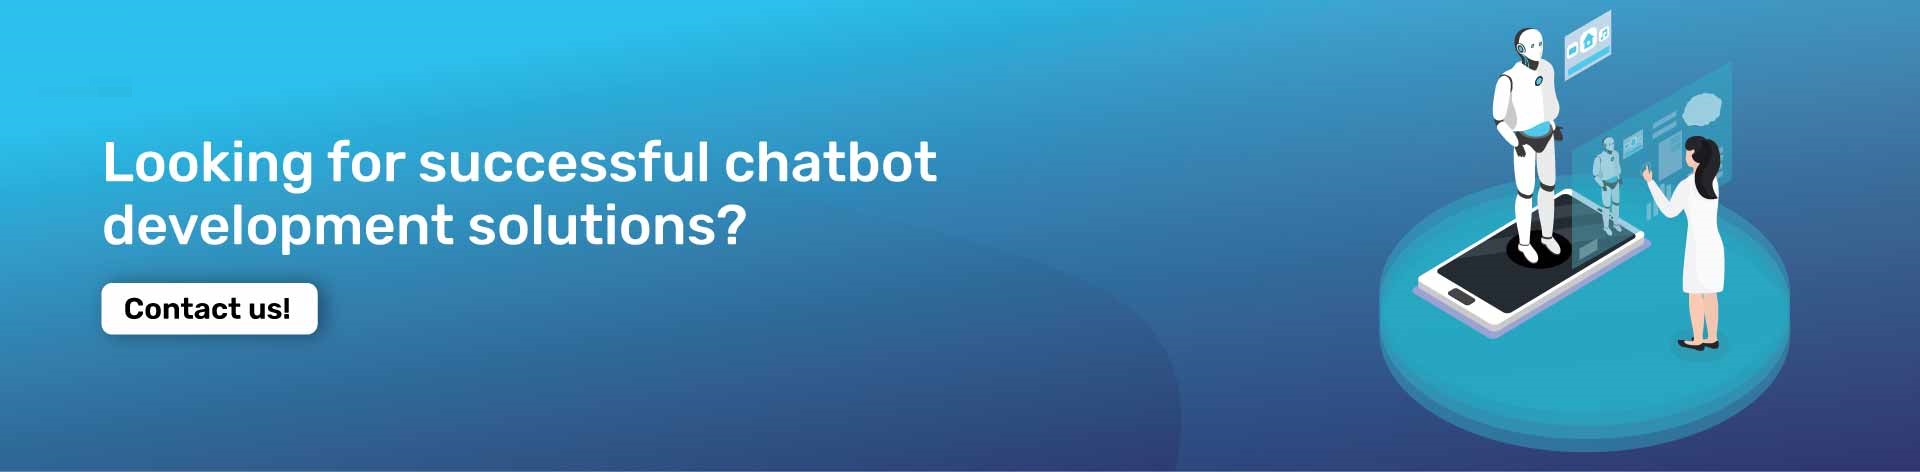 chatbot app development cta